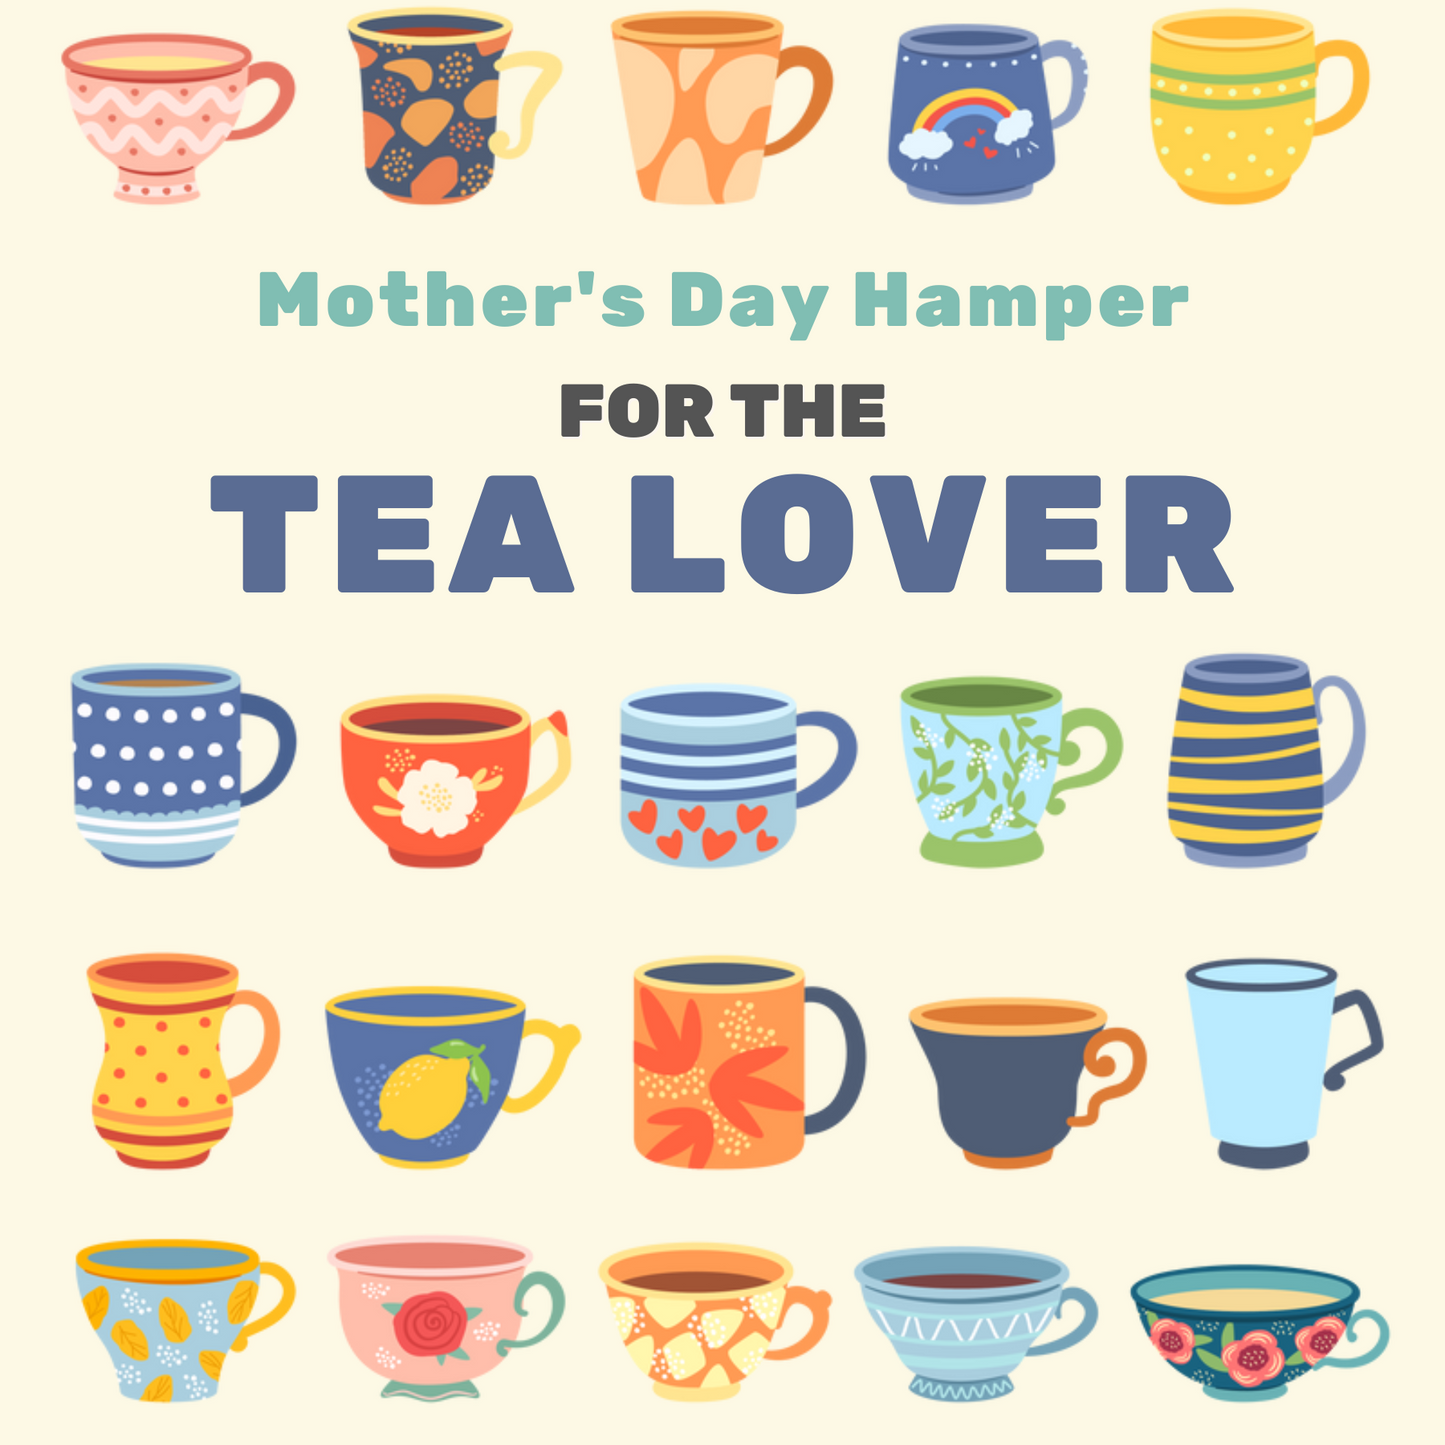 Mother's Day Hamper For the Tea Drinker